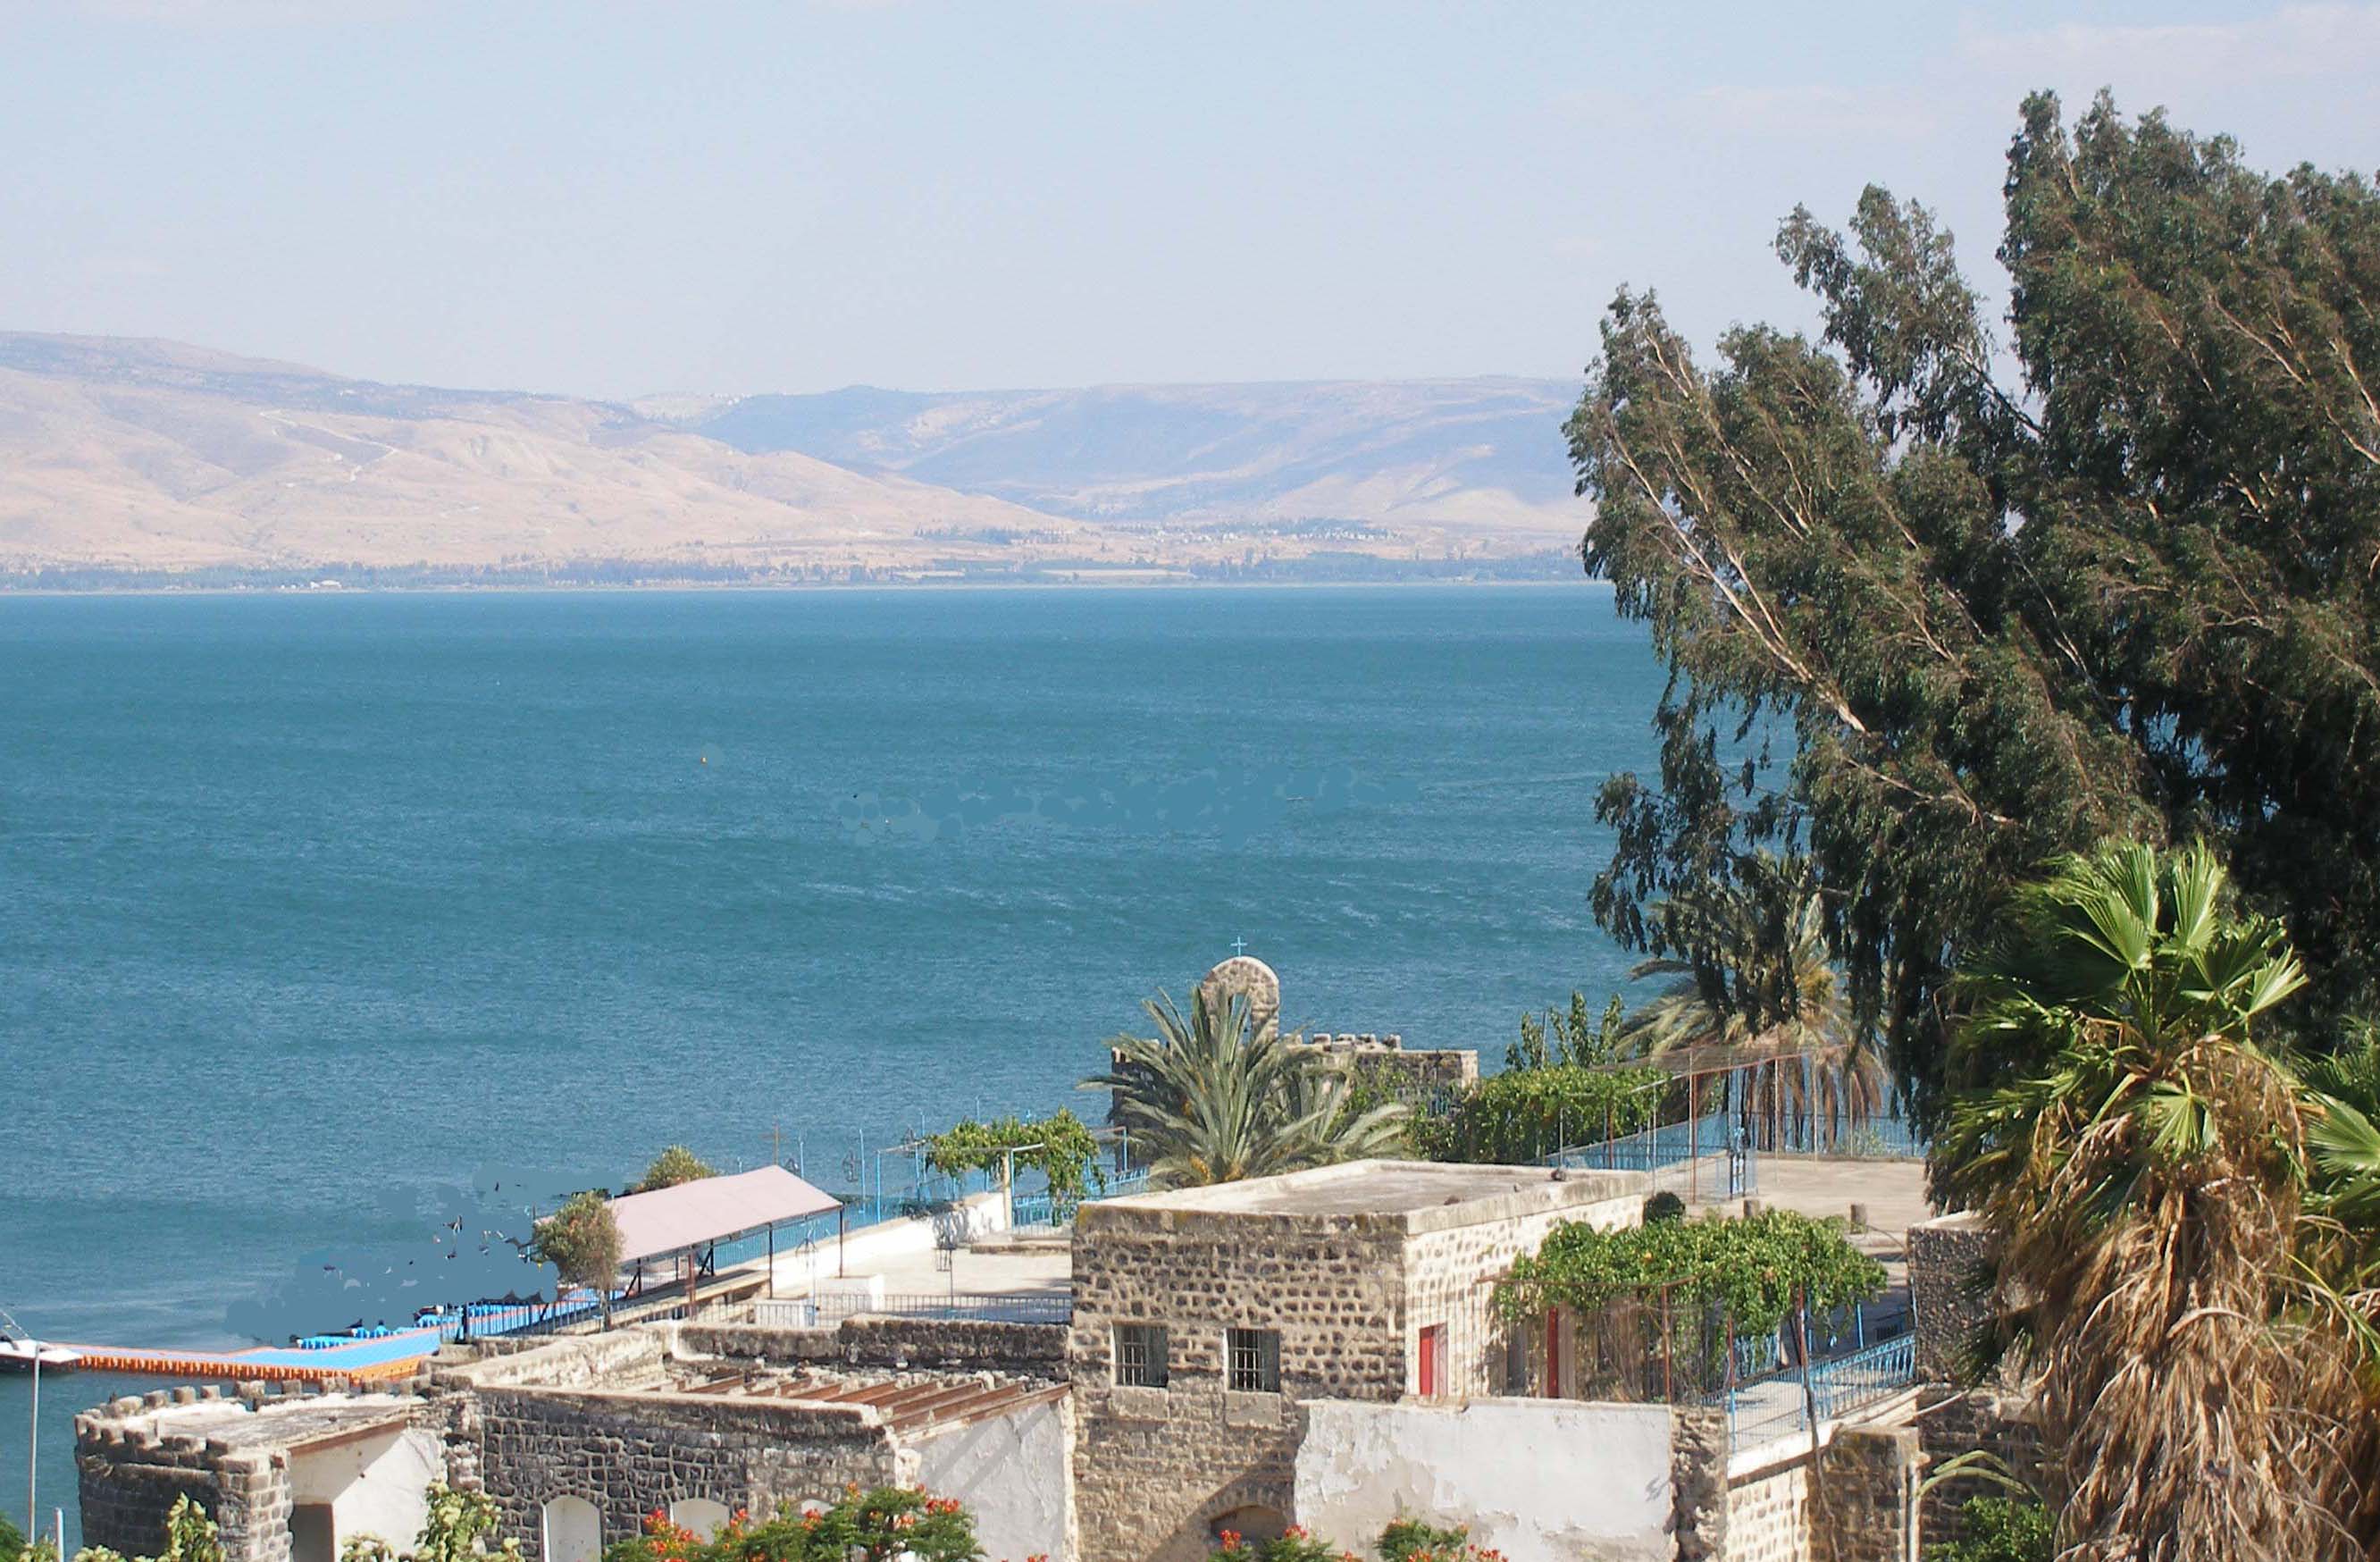 TheSea of Galilee